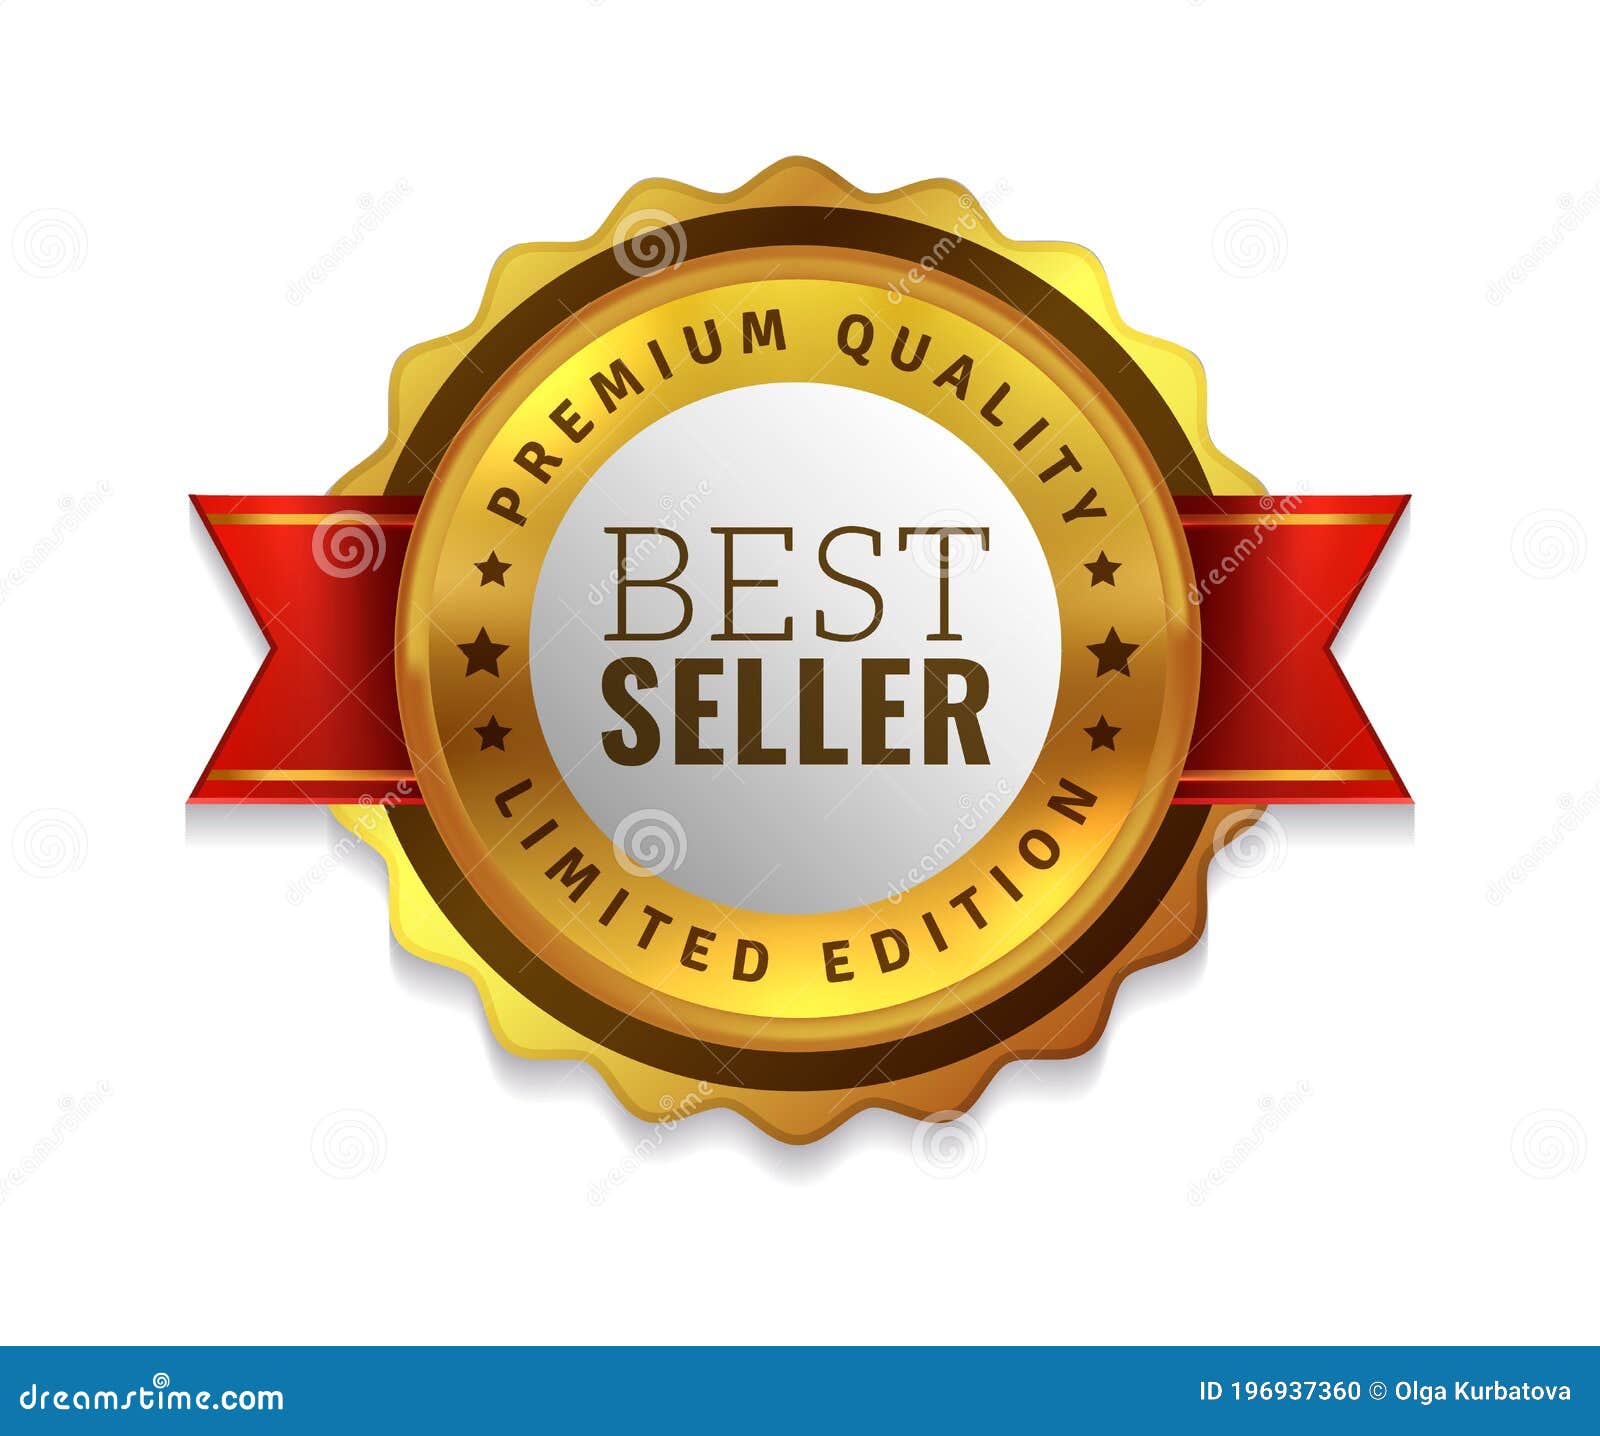 Best Seller Badge. Premium Golden Emblem, Luxury Genuine and